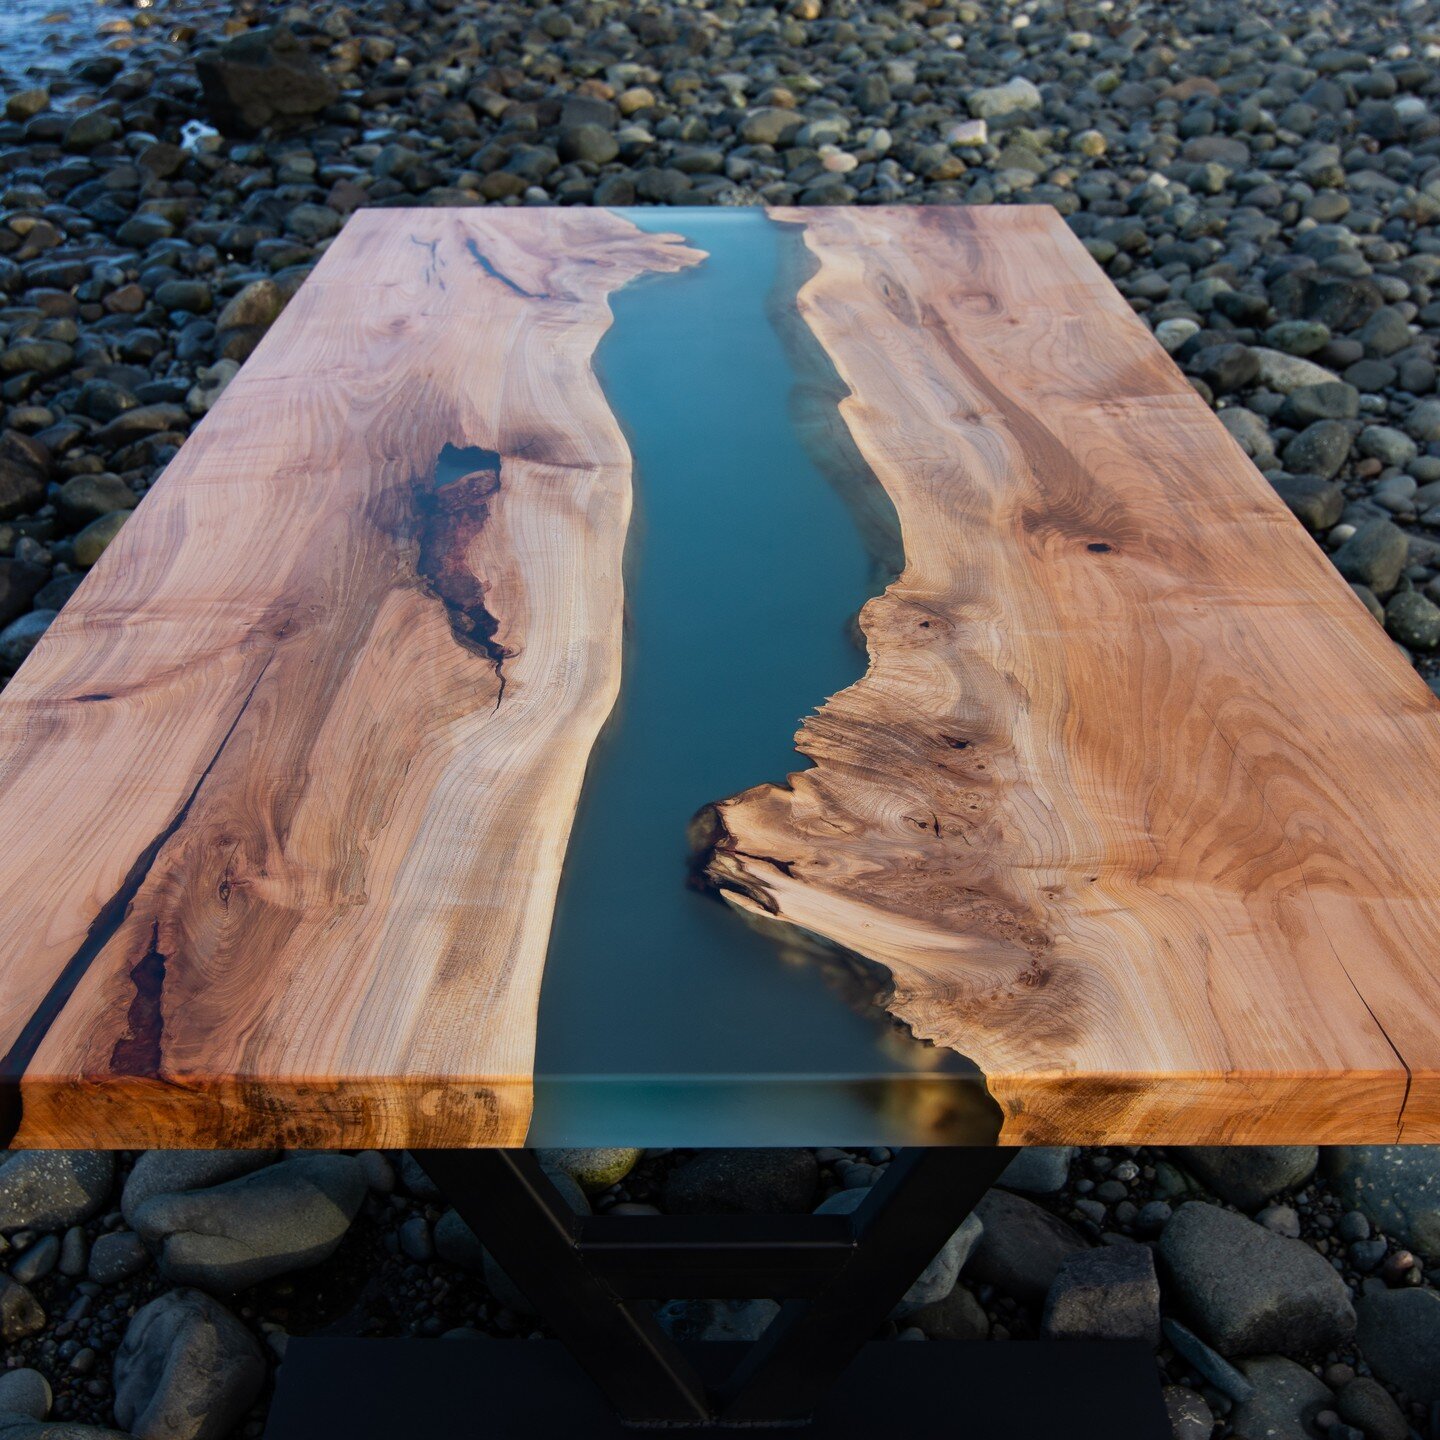 Stunning maple river table, sourced and salvaged from Quadra Island. #maple #liveedge #rivertable #furniture #woodworking #epoxy #vancouverisland #quadraisland #westcoast #dinningtable